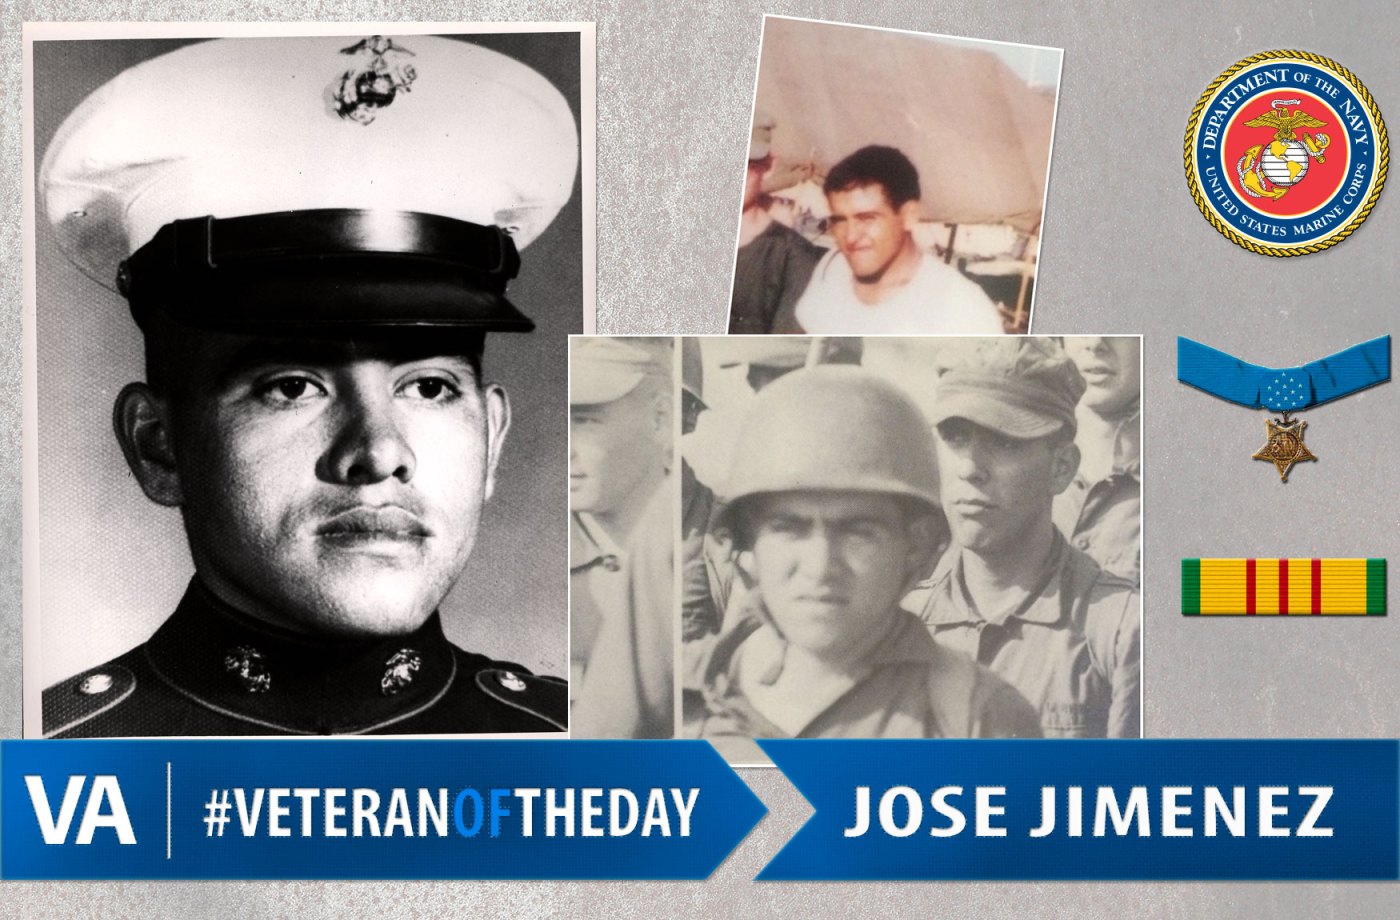 Jose Jimenez - Veteran of the Day